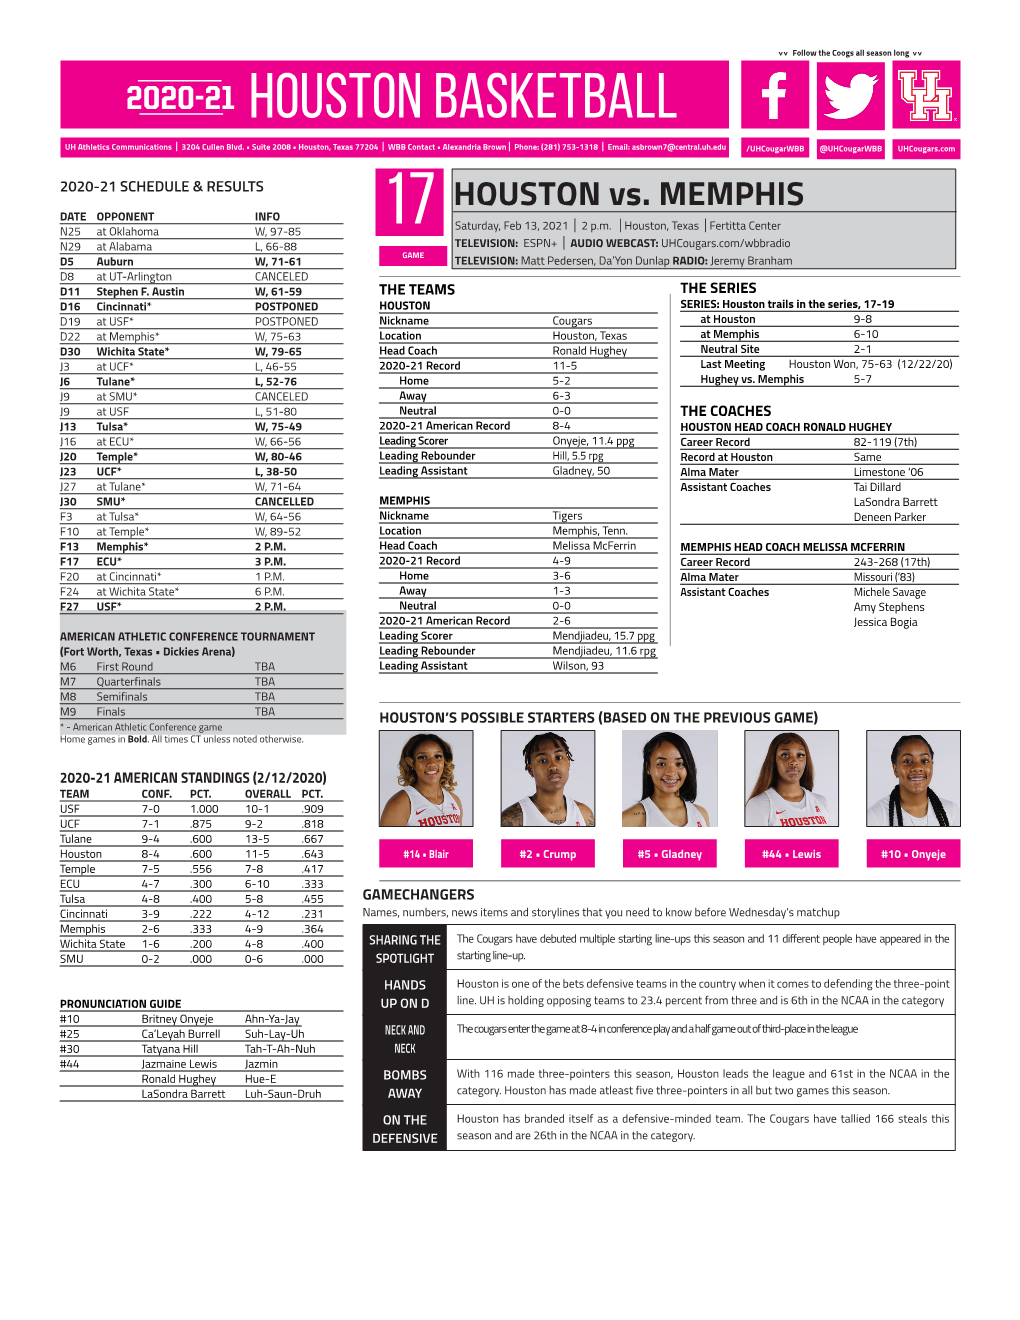 2020-21 Houston Basketball